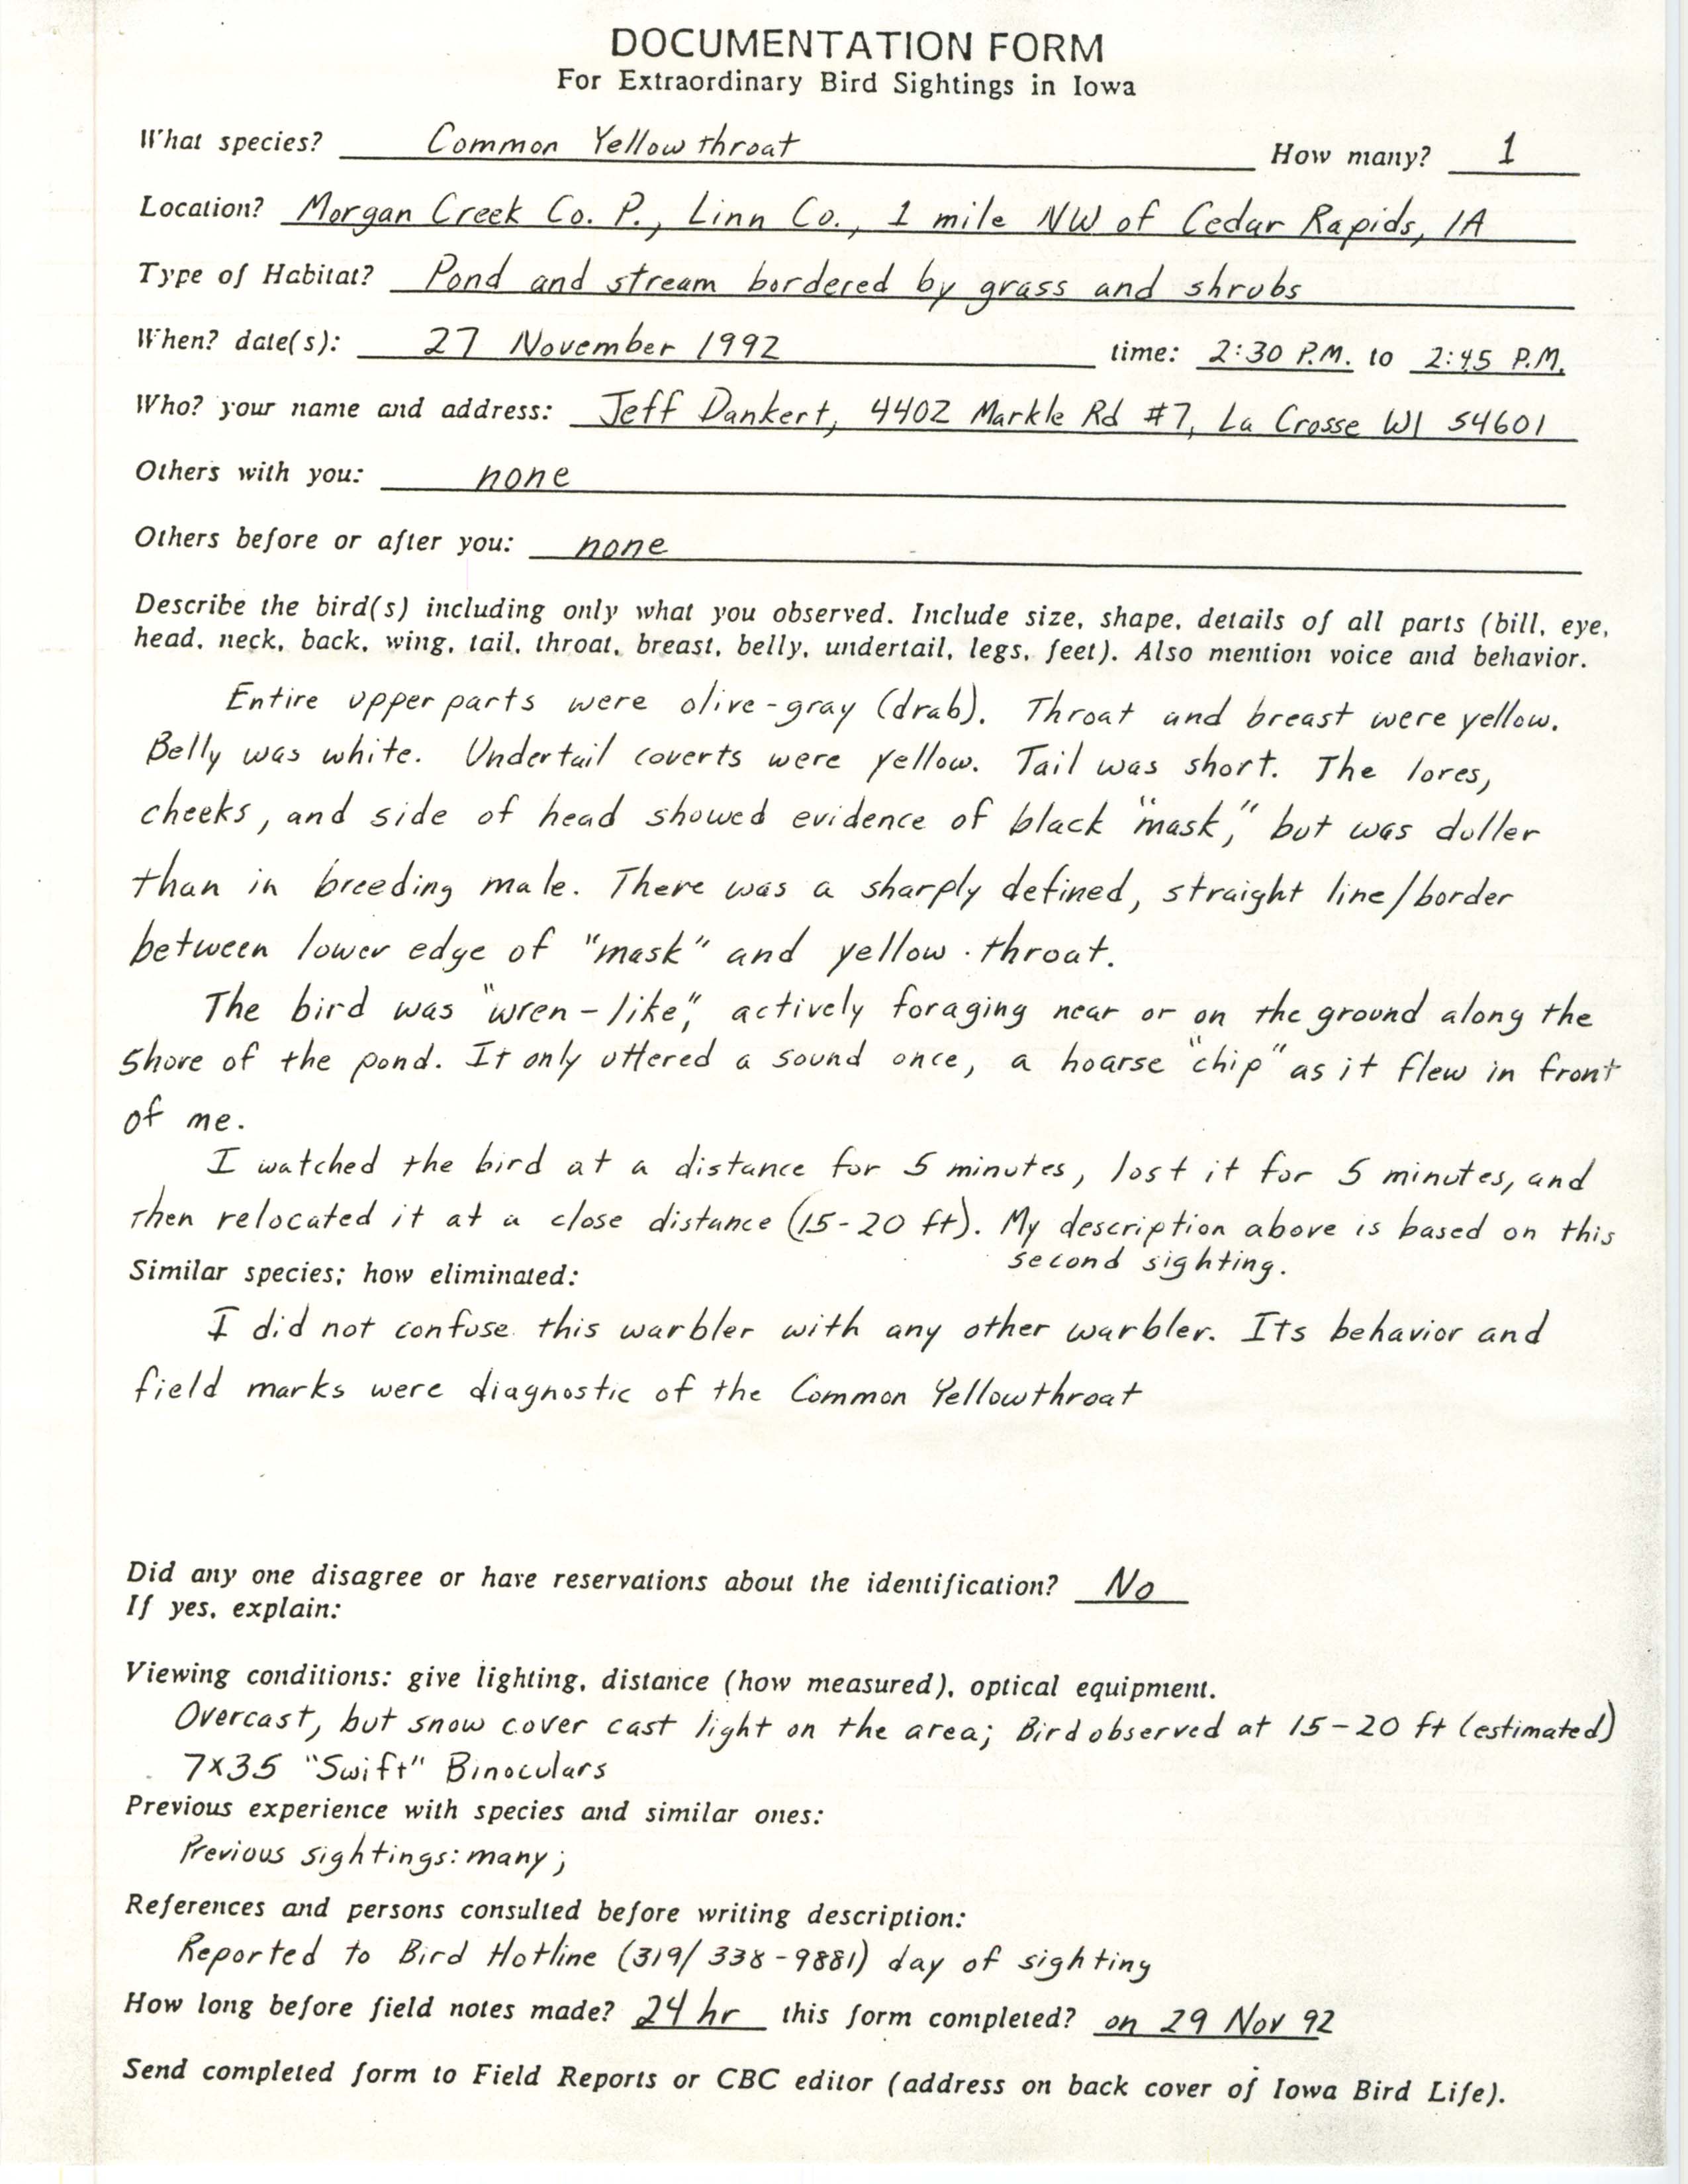 Rare bird documentation form for Common Yellowthroat at Morgan Creek Park in Linn County, 1992